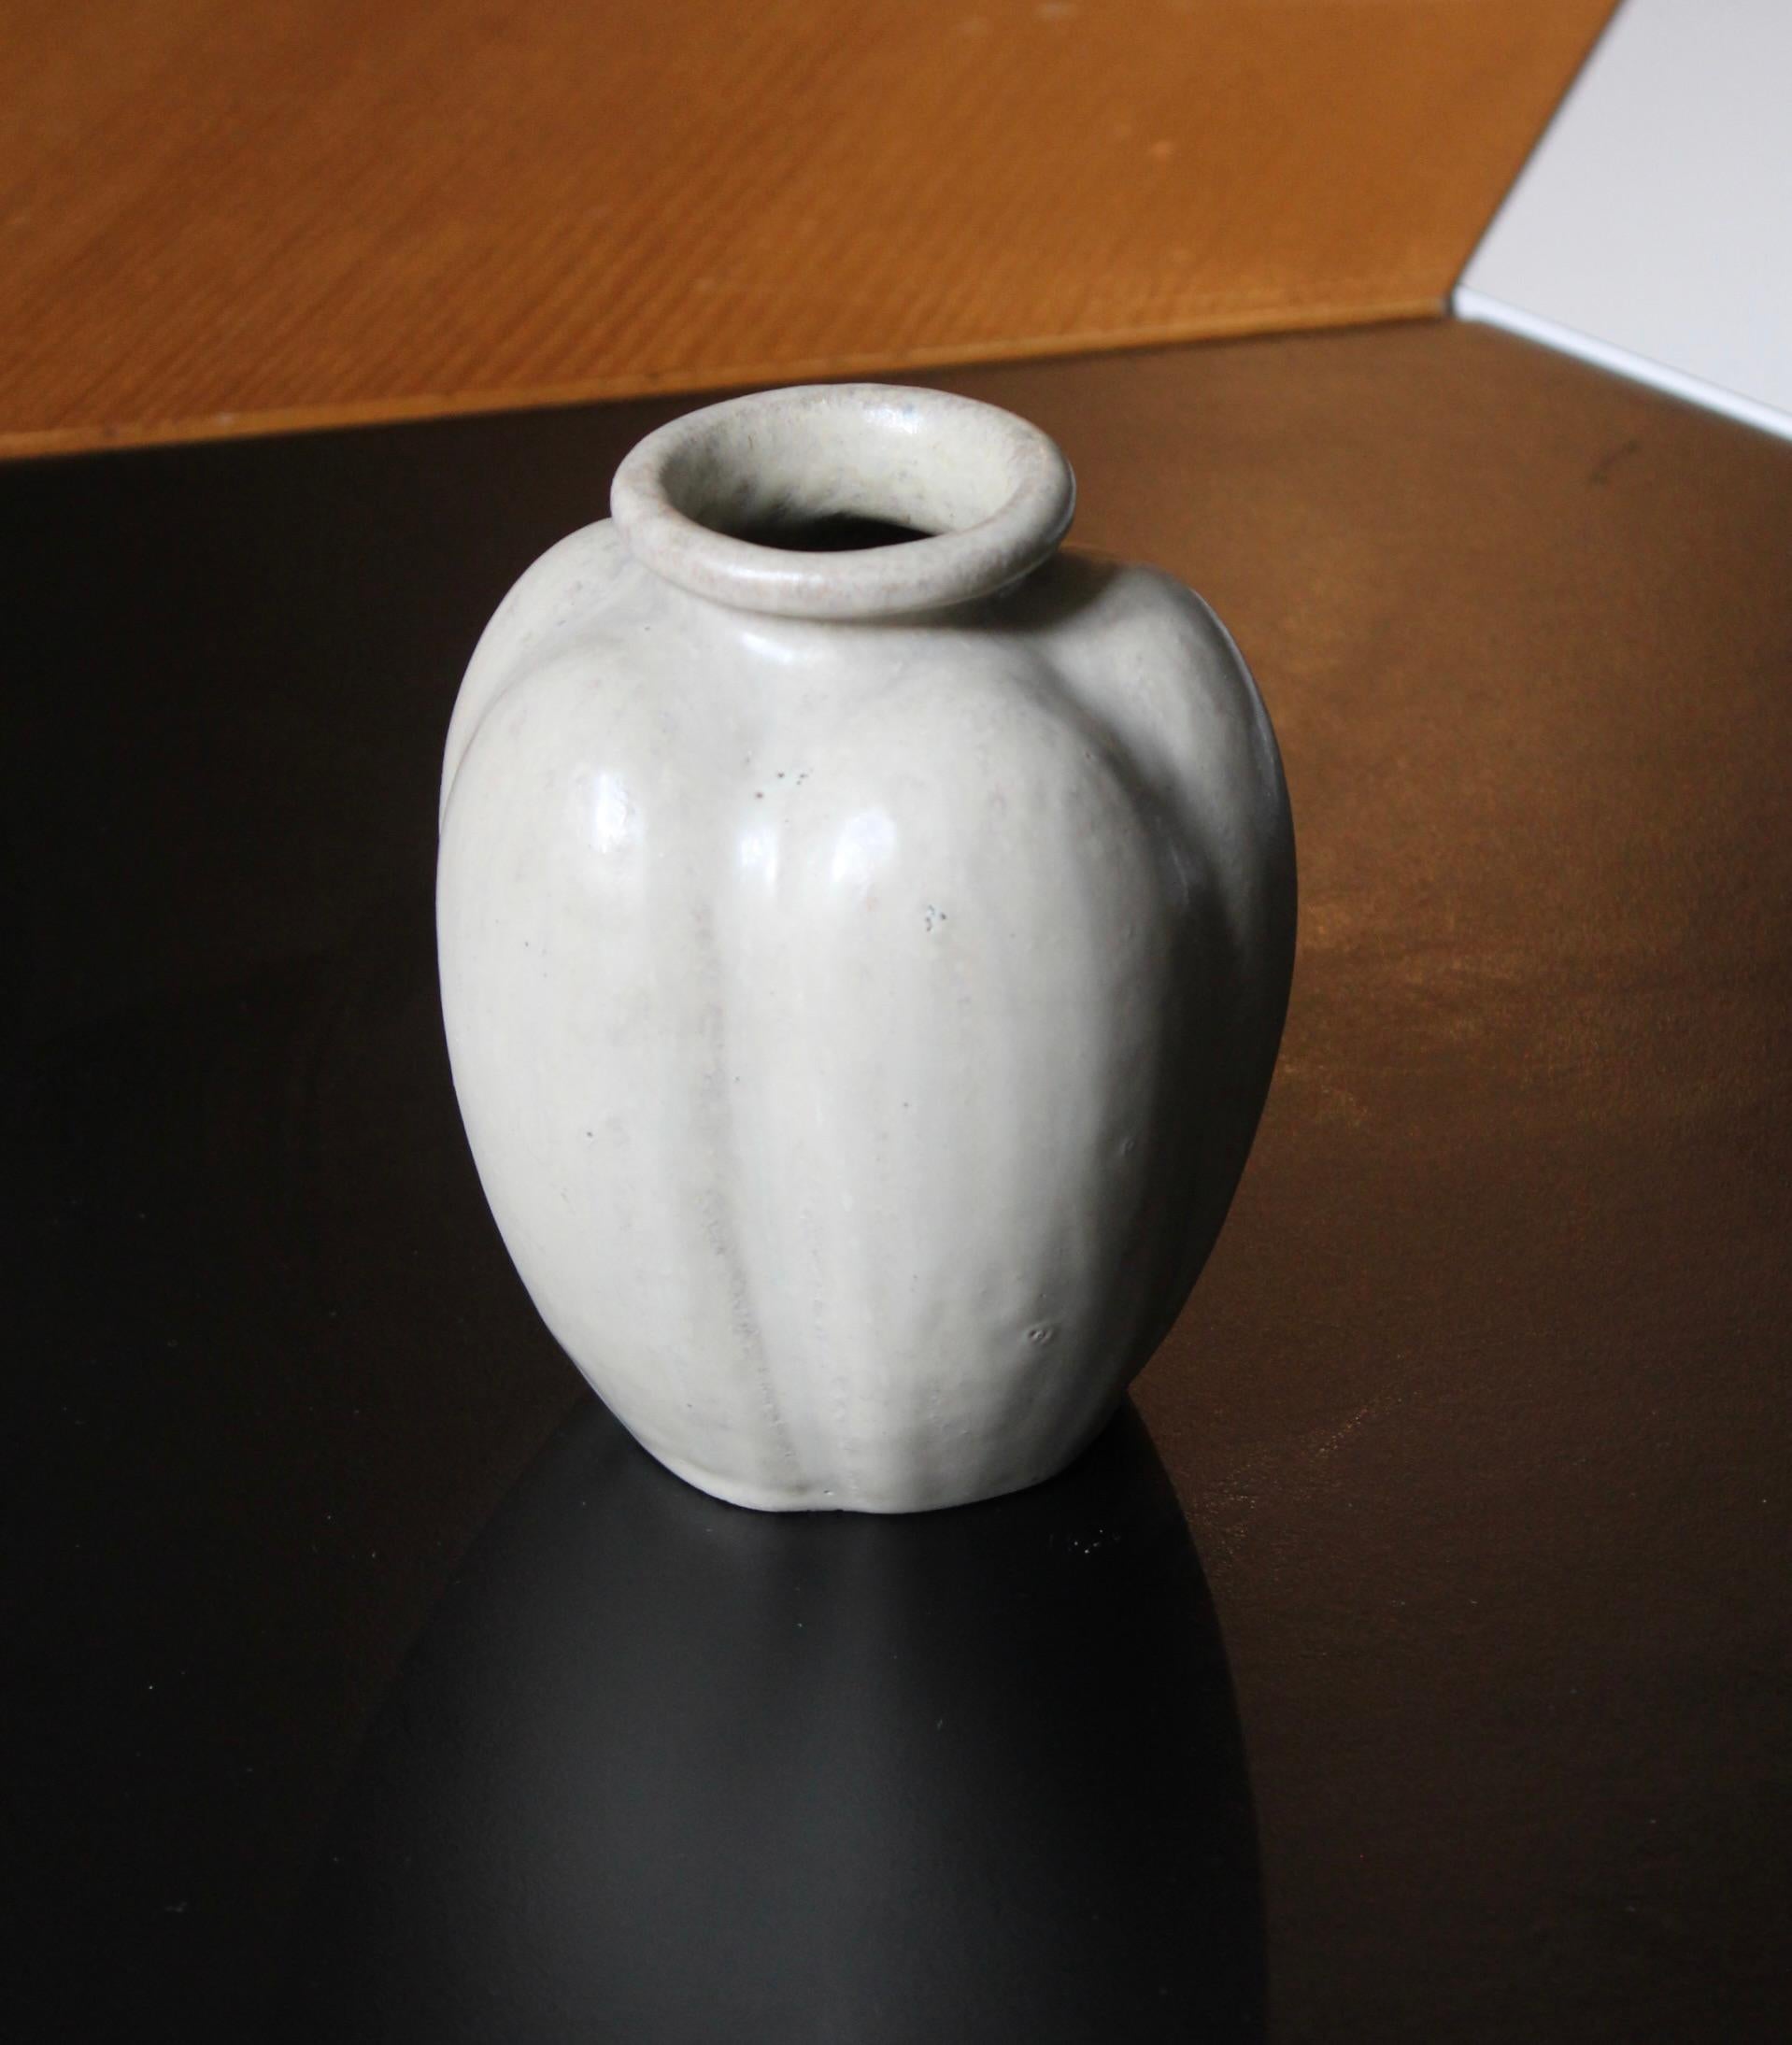 A grey-glazed fluted stoneware vase designed and produced by Arne Bang, Denmark, 1940s. 

